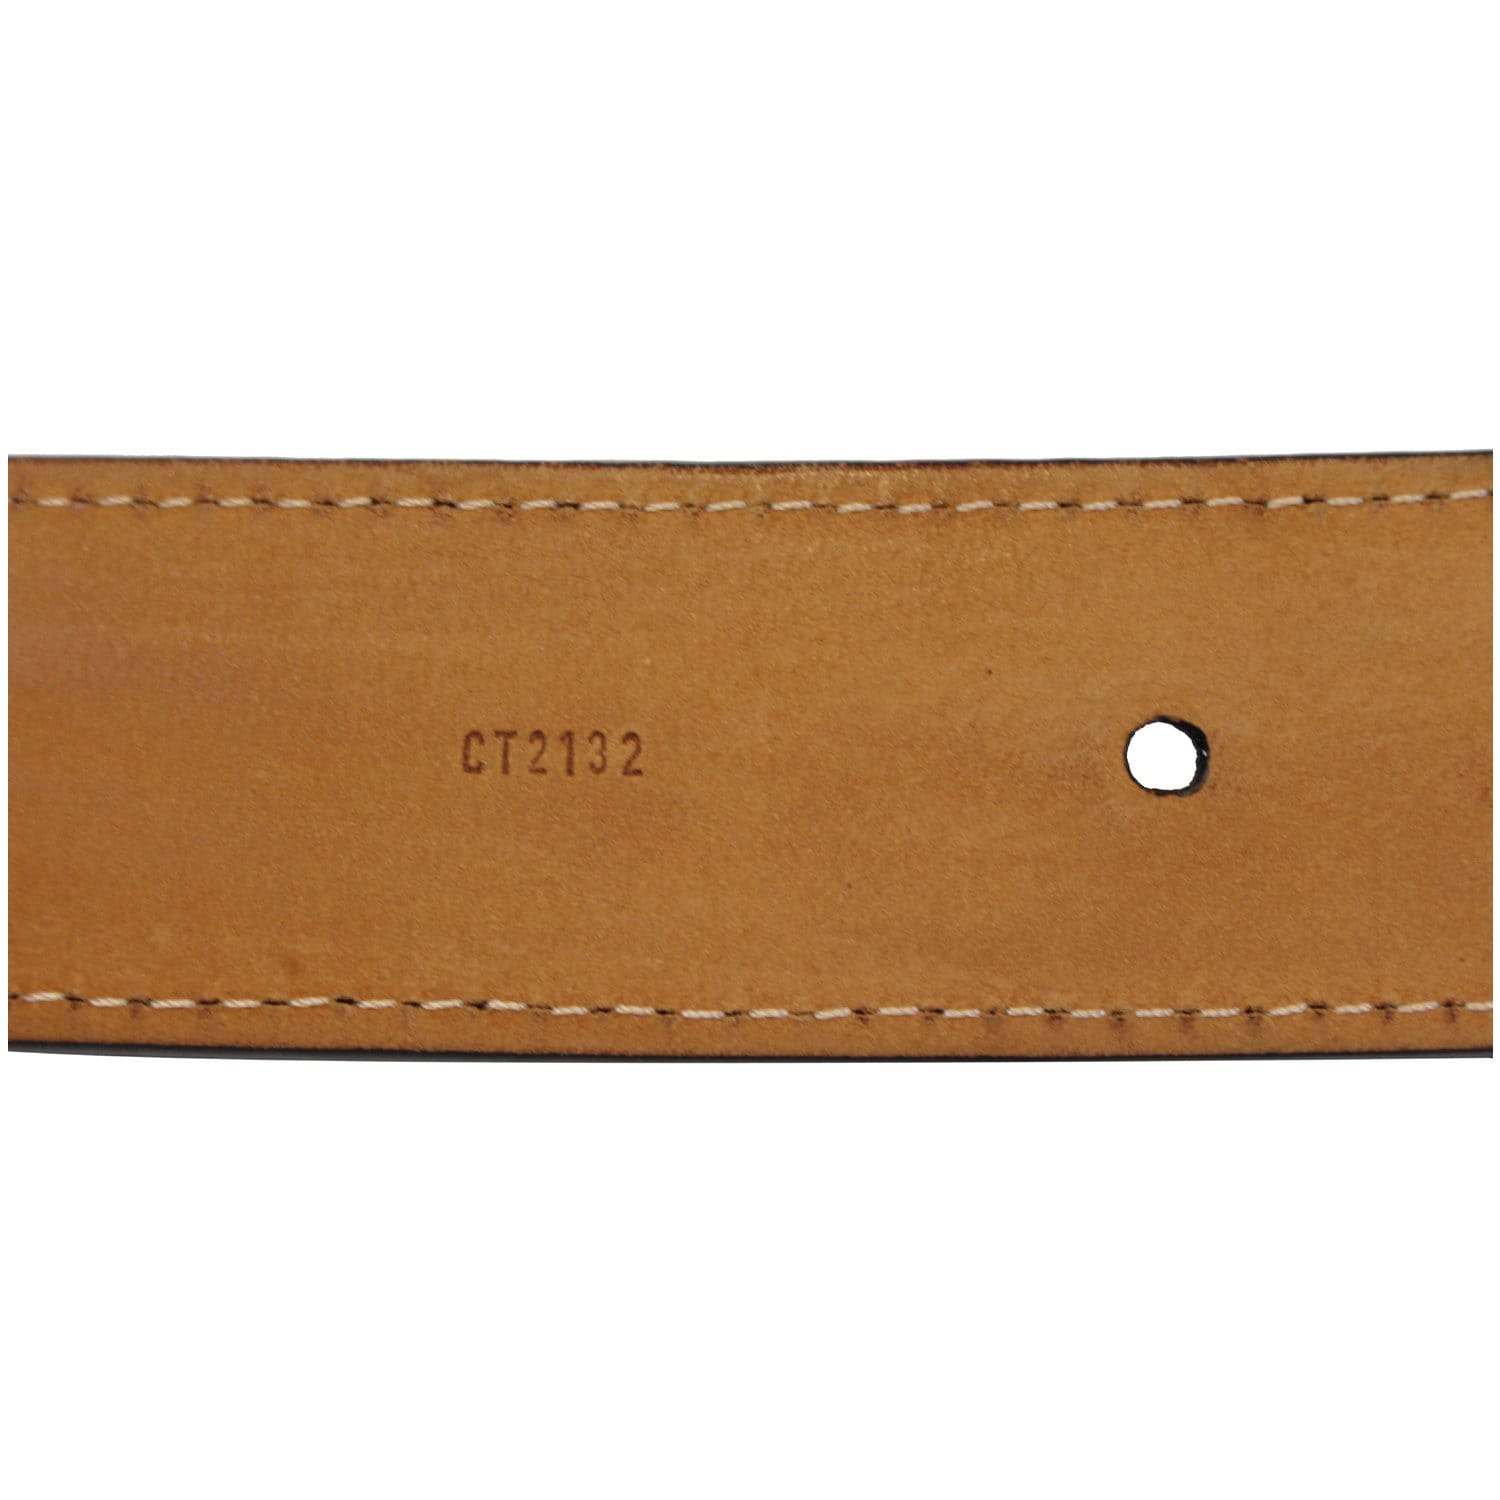 Louis Vuitton Damier Ebene Brown Check Belt - 29-33